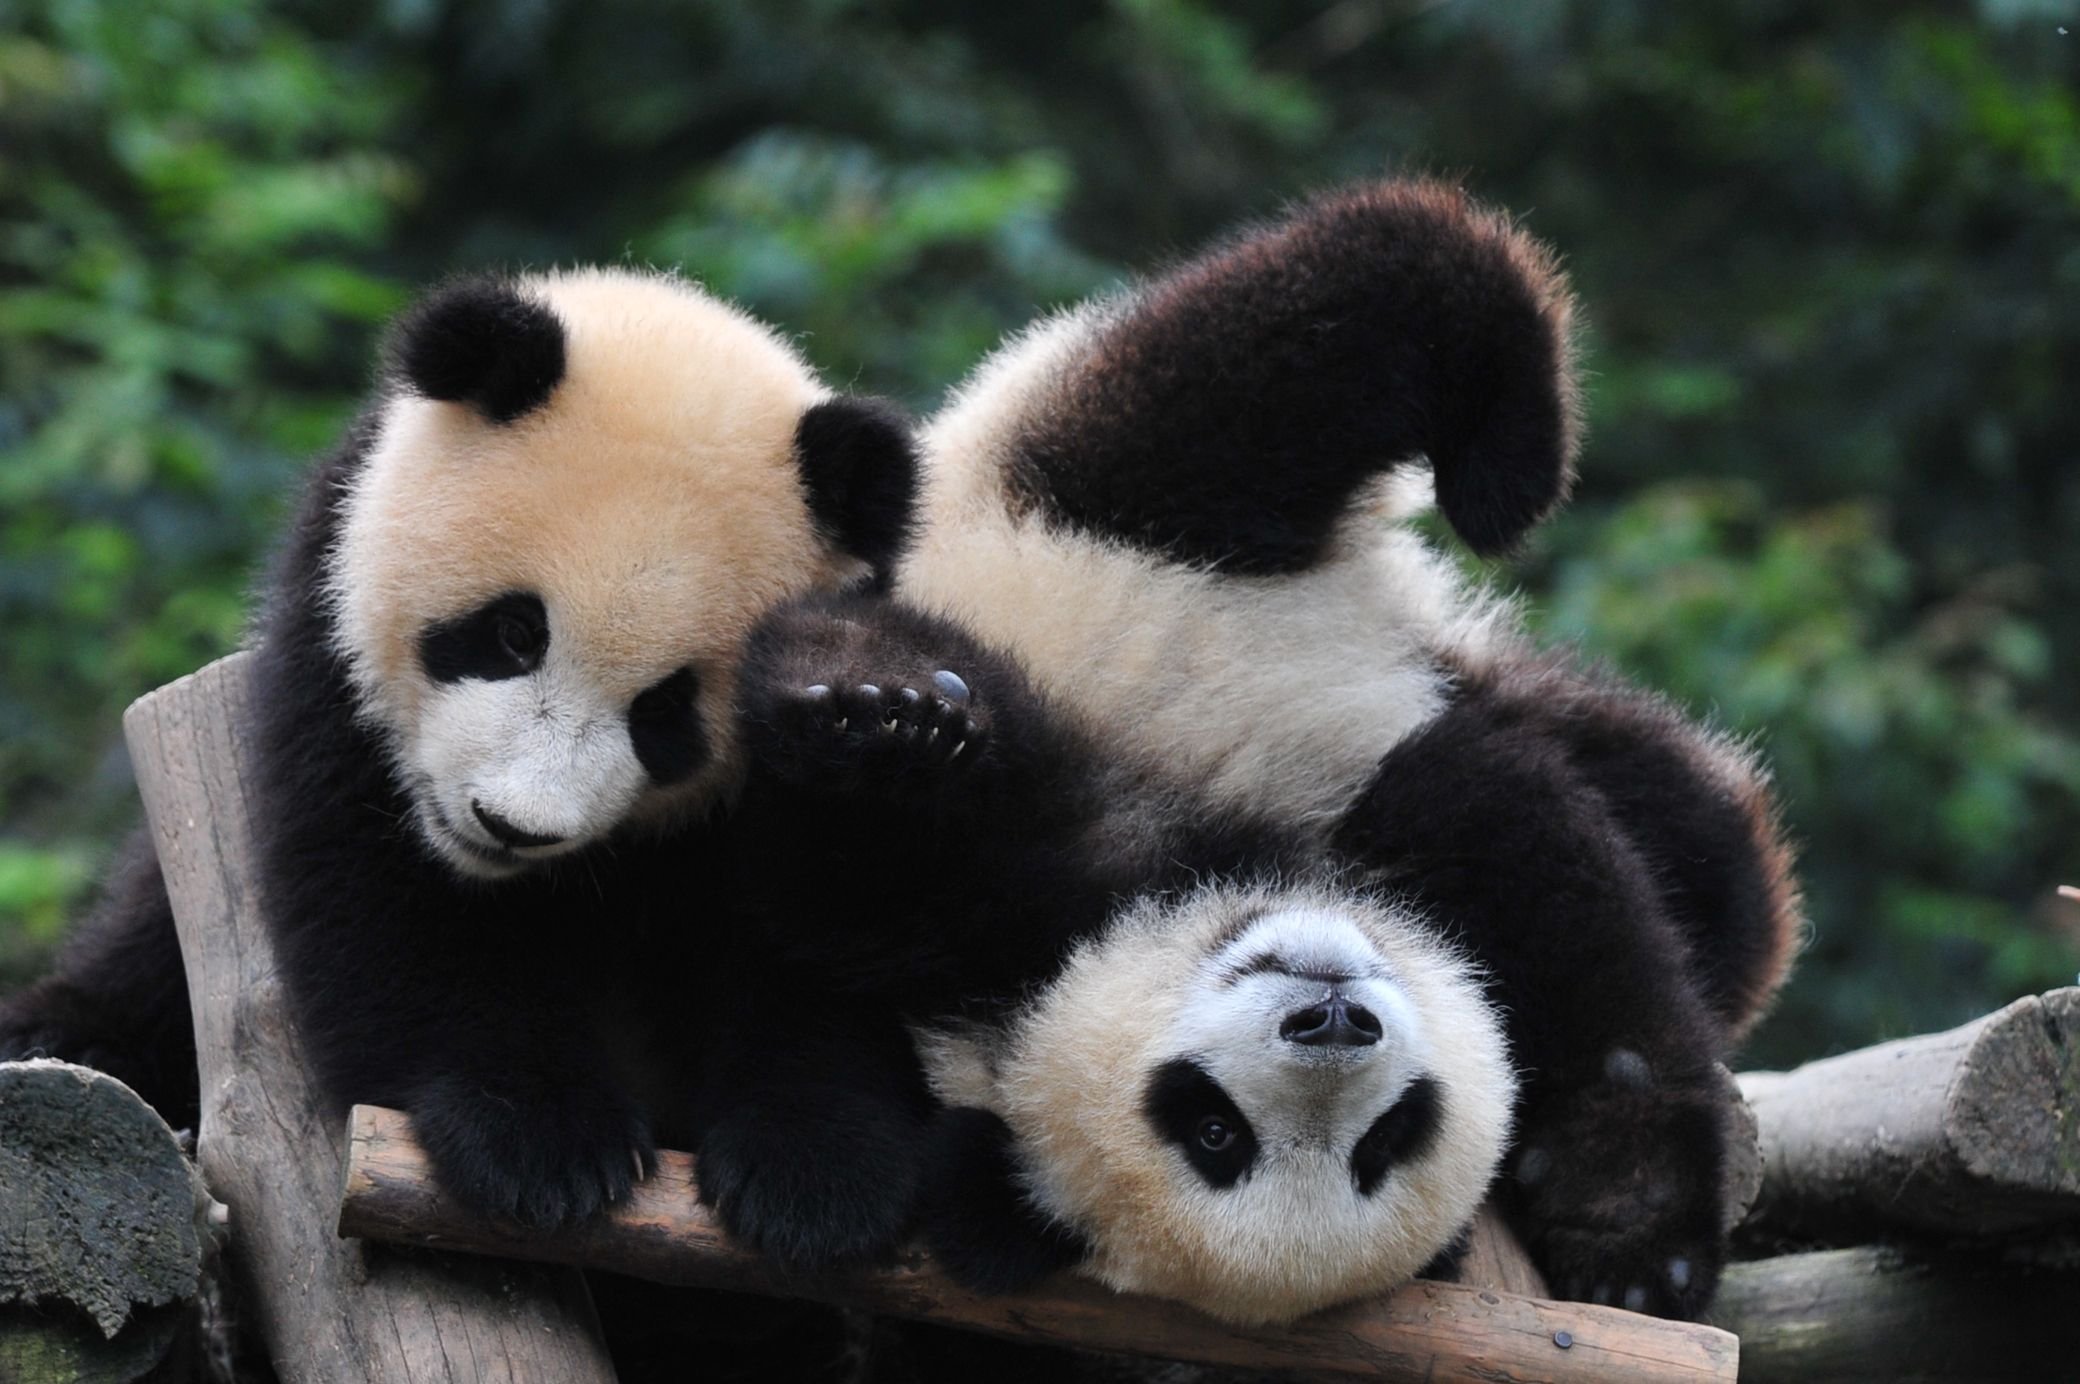 panda-pandas-baer-bears-baby-cute-17-wallpapers-hd-desktop-and-mobile-backgrounds